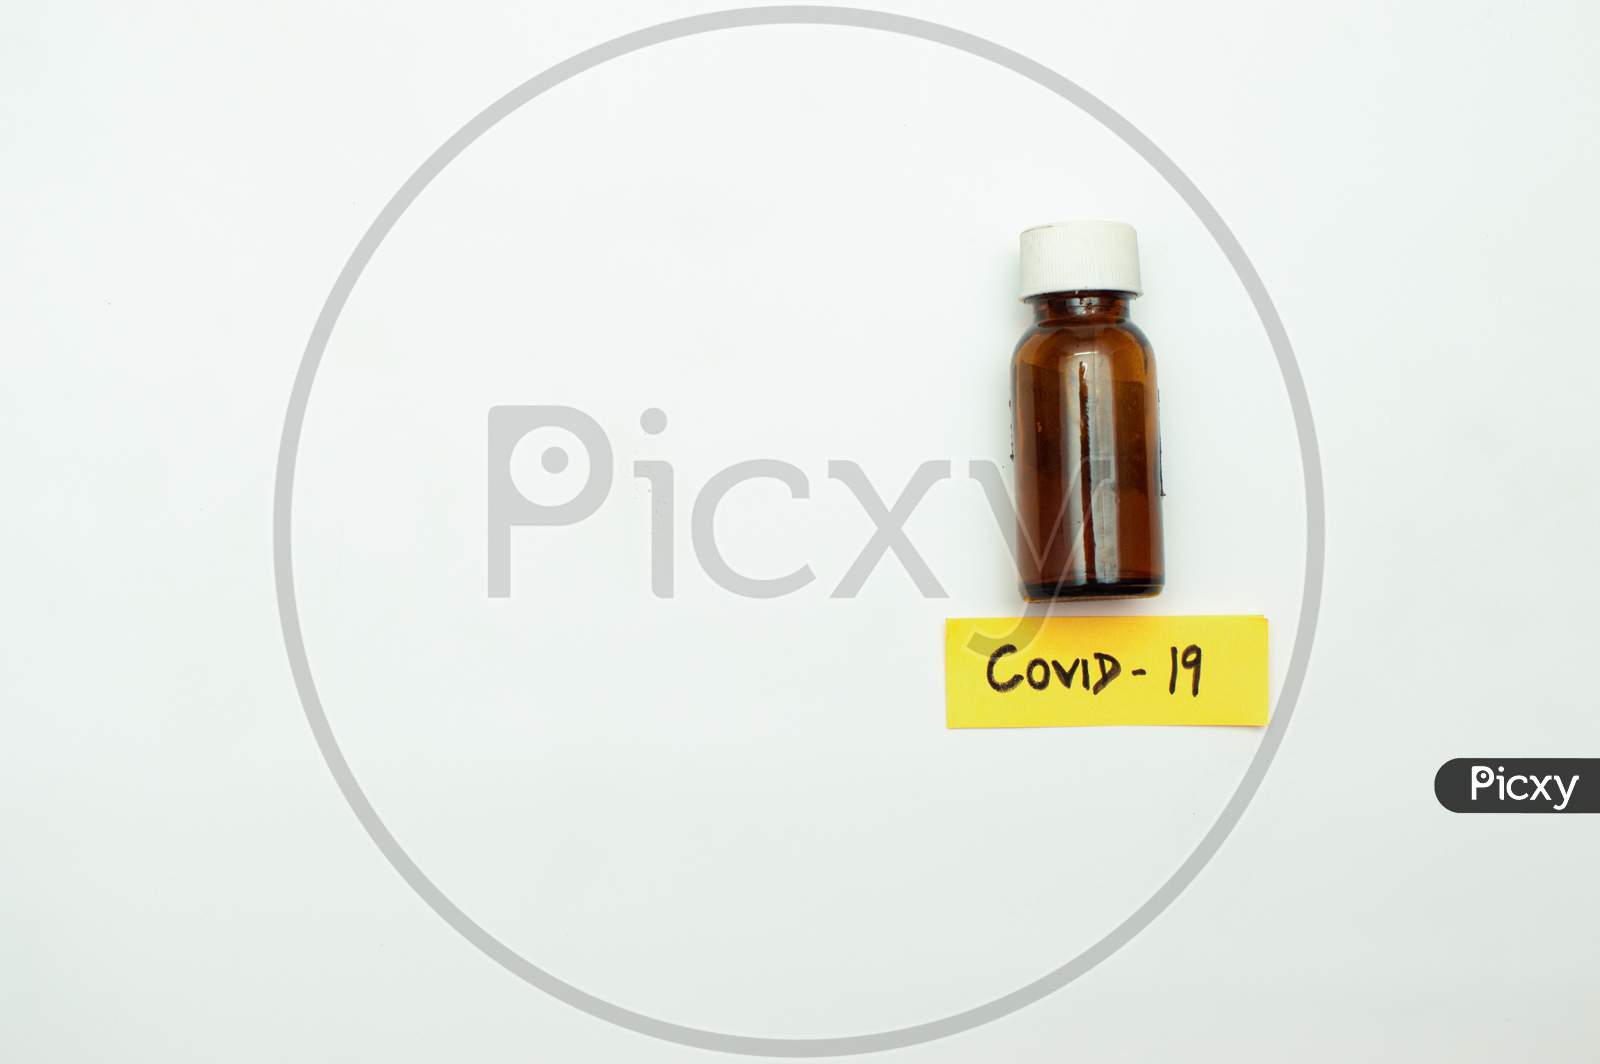 Corona virus vaccine in small brown bottle